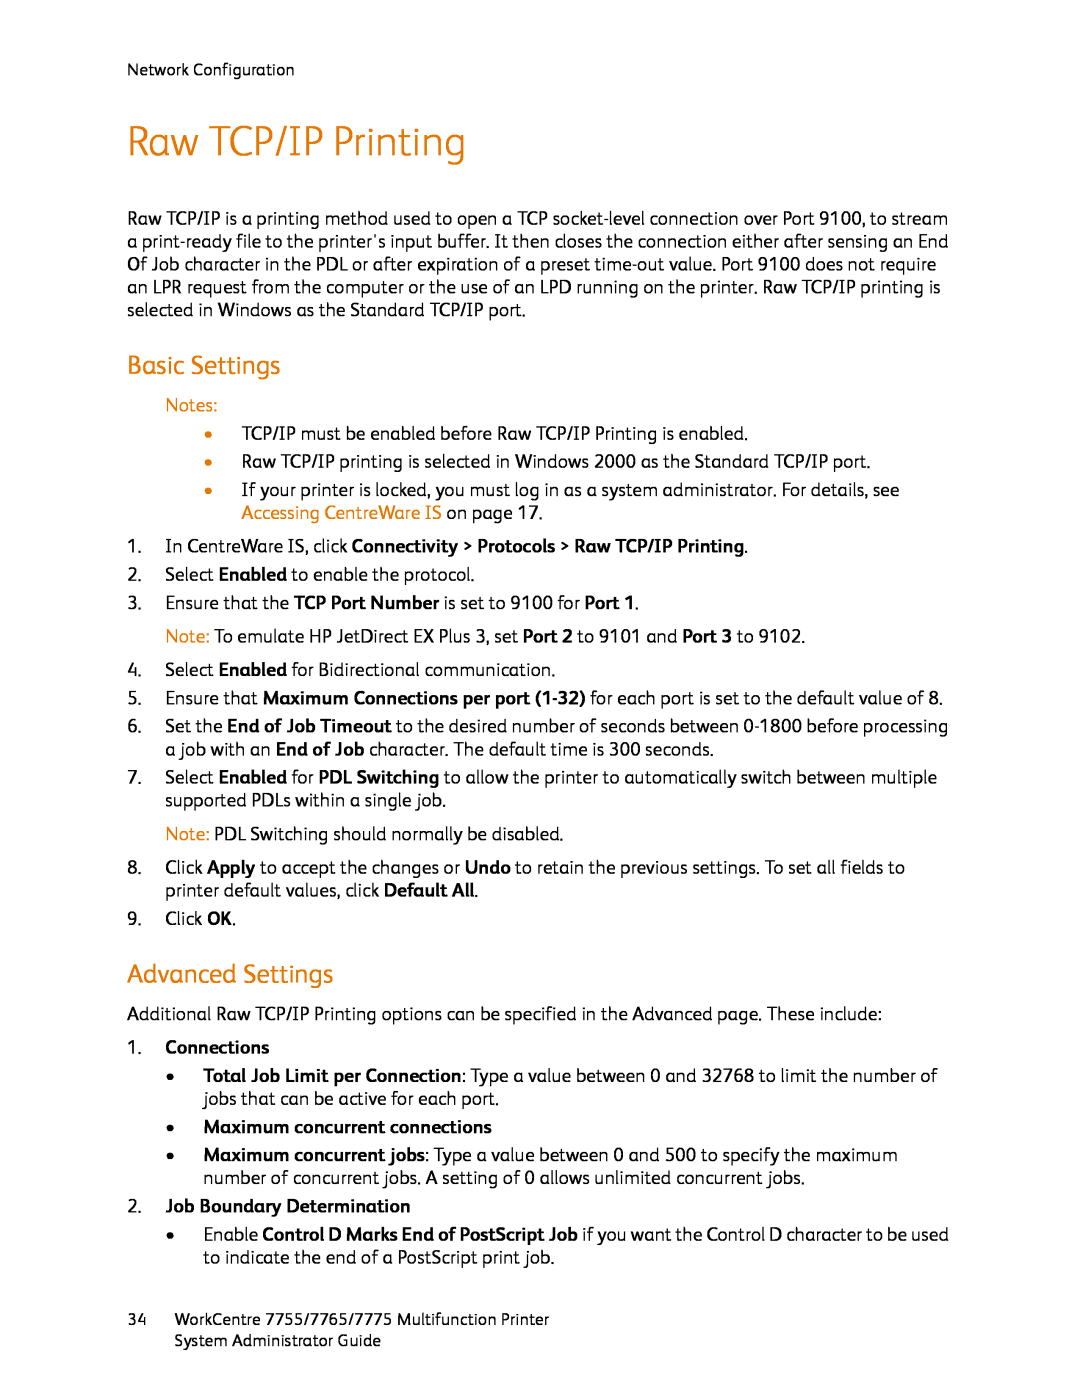 Xerox 7755, 7765, 7775 manual Raw TCP/IP Printing, Basic Settings, Advanced Settings, Notes 